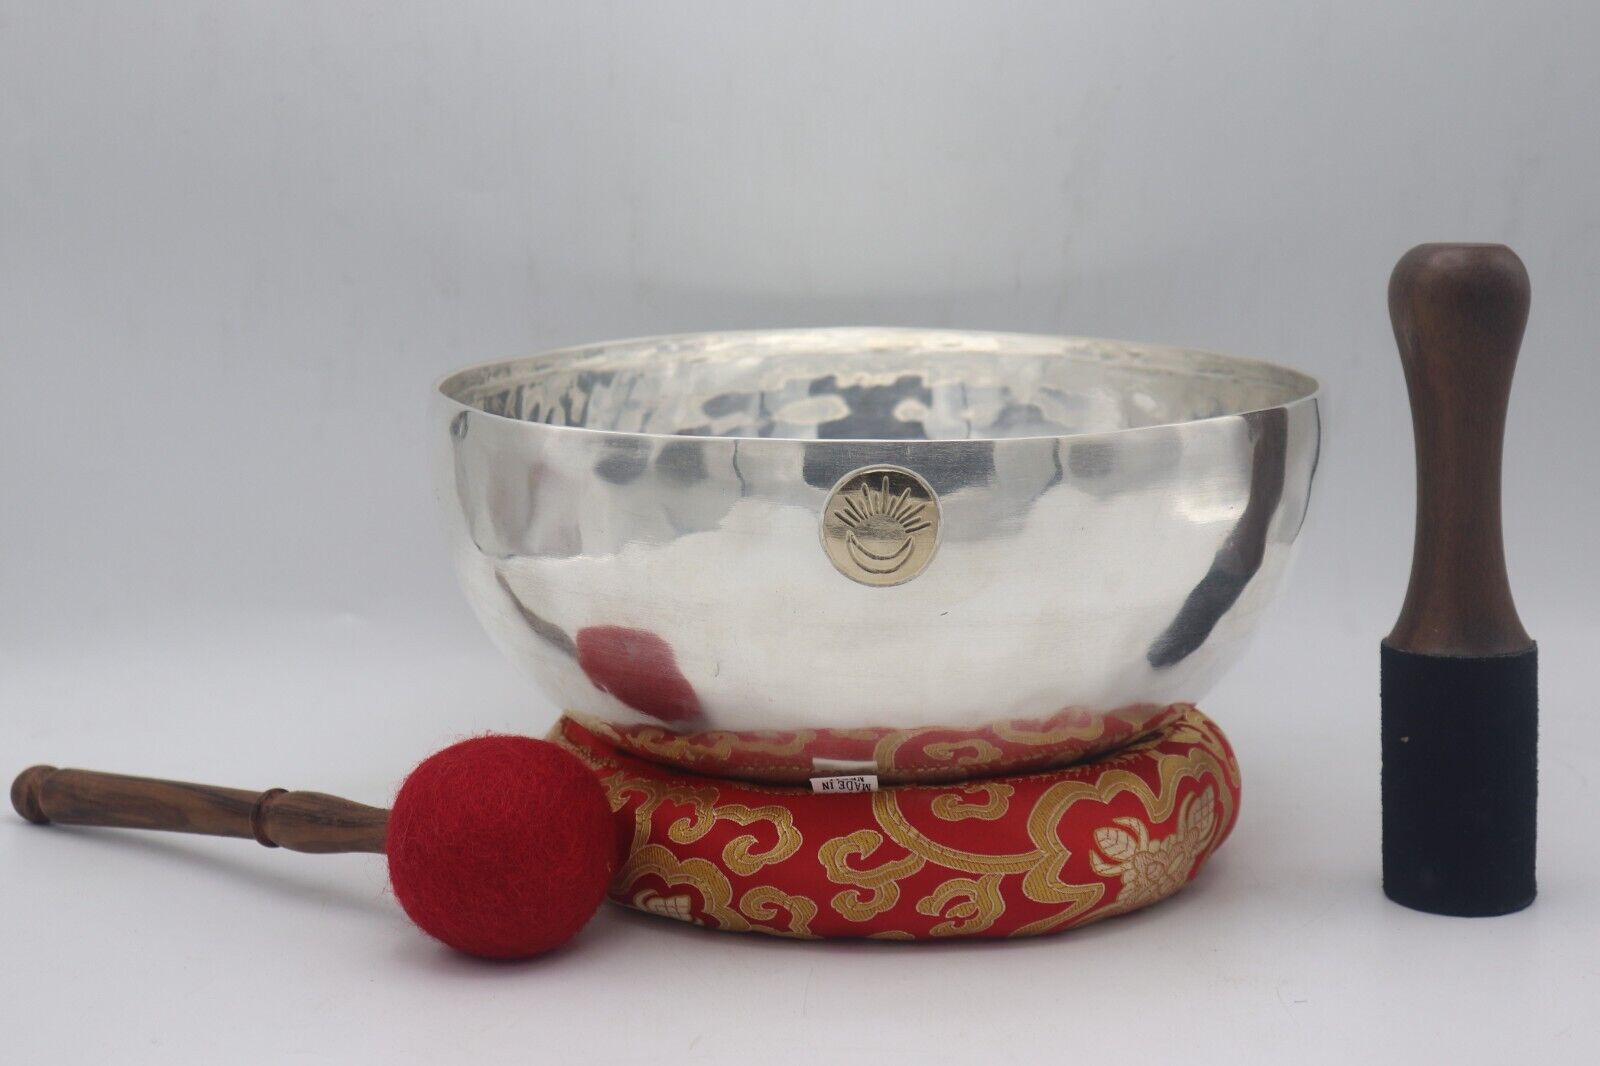 10 Inch Silver Plated Full Moon Singing Bowl-Full Moon Tibetan Singing bowls.